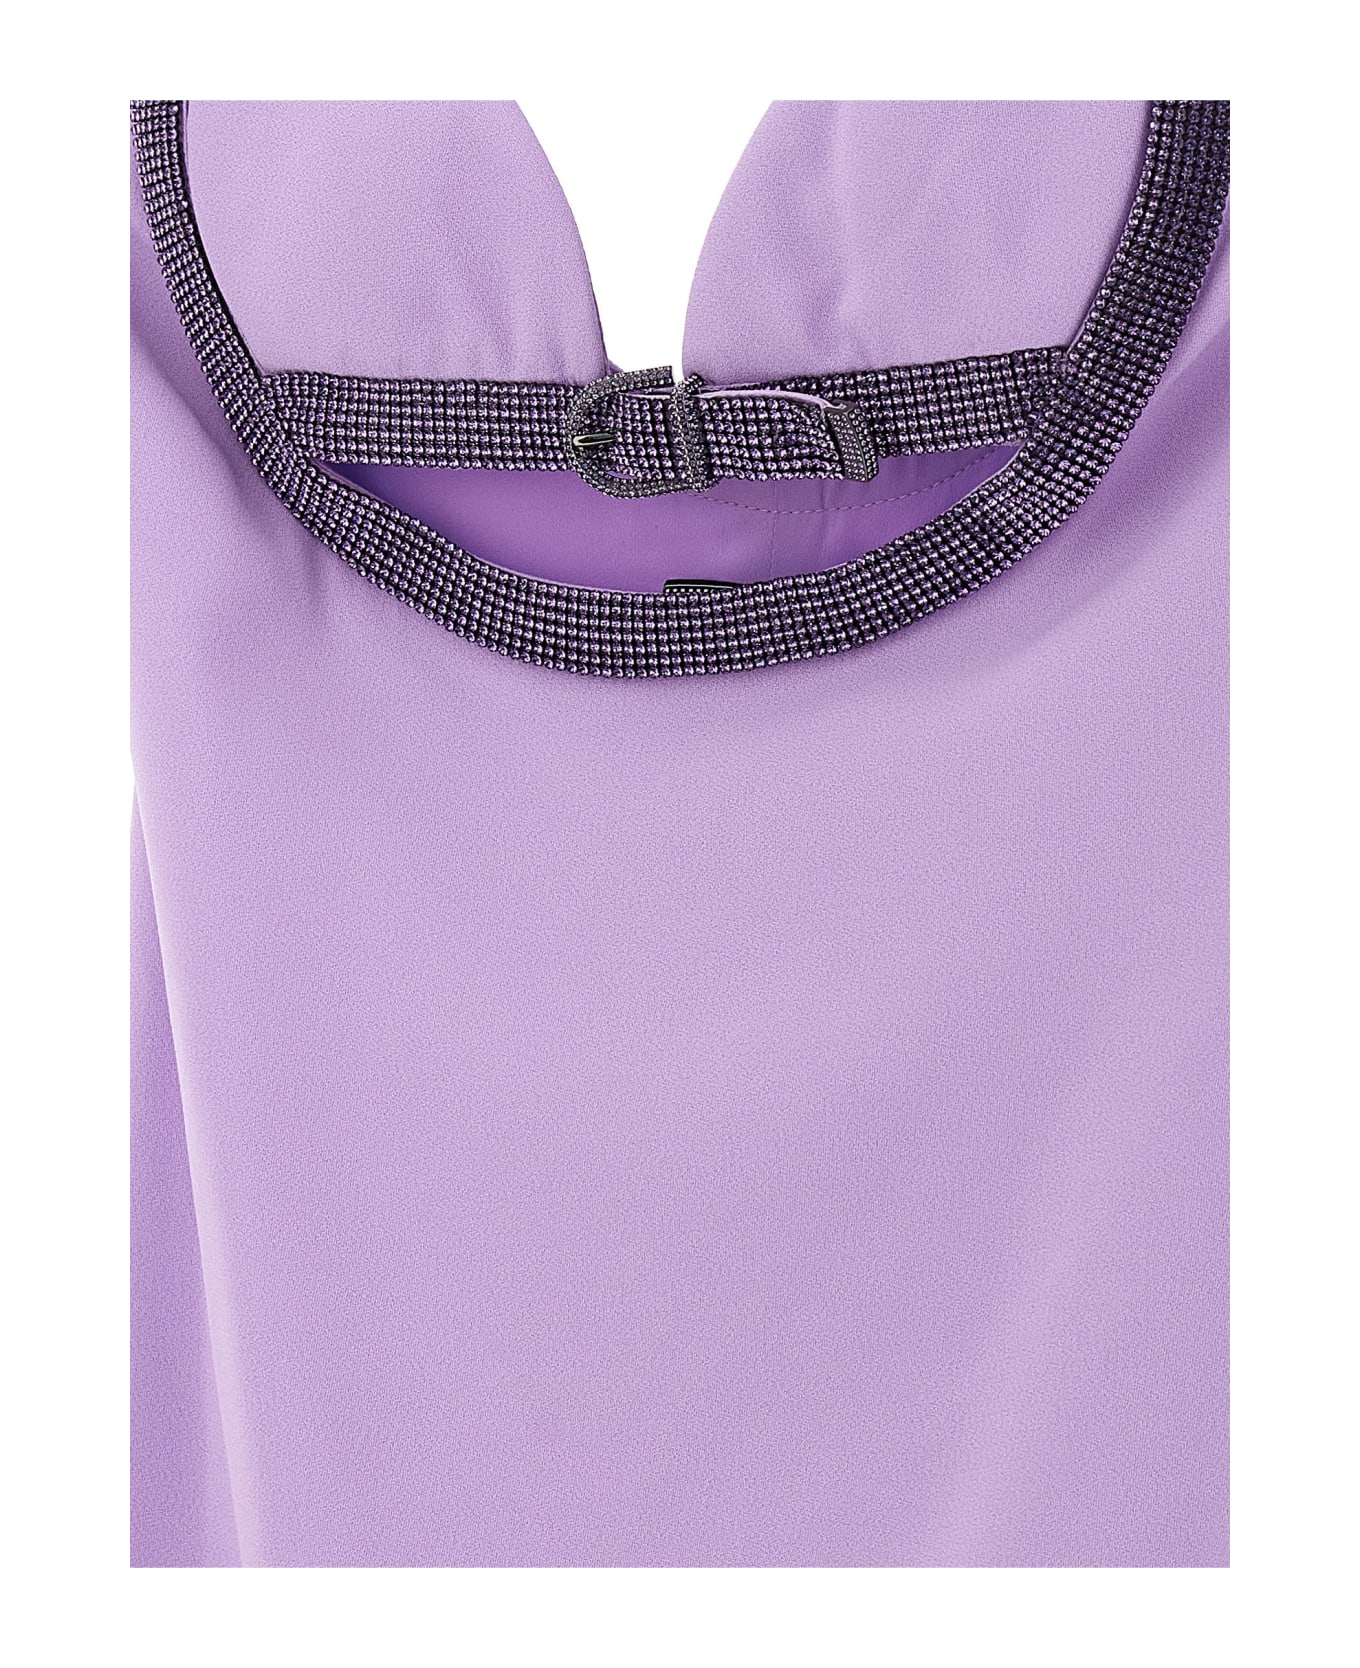 Versace X Dua Lipa Crystal Cut Out Dress - Purple